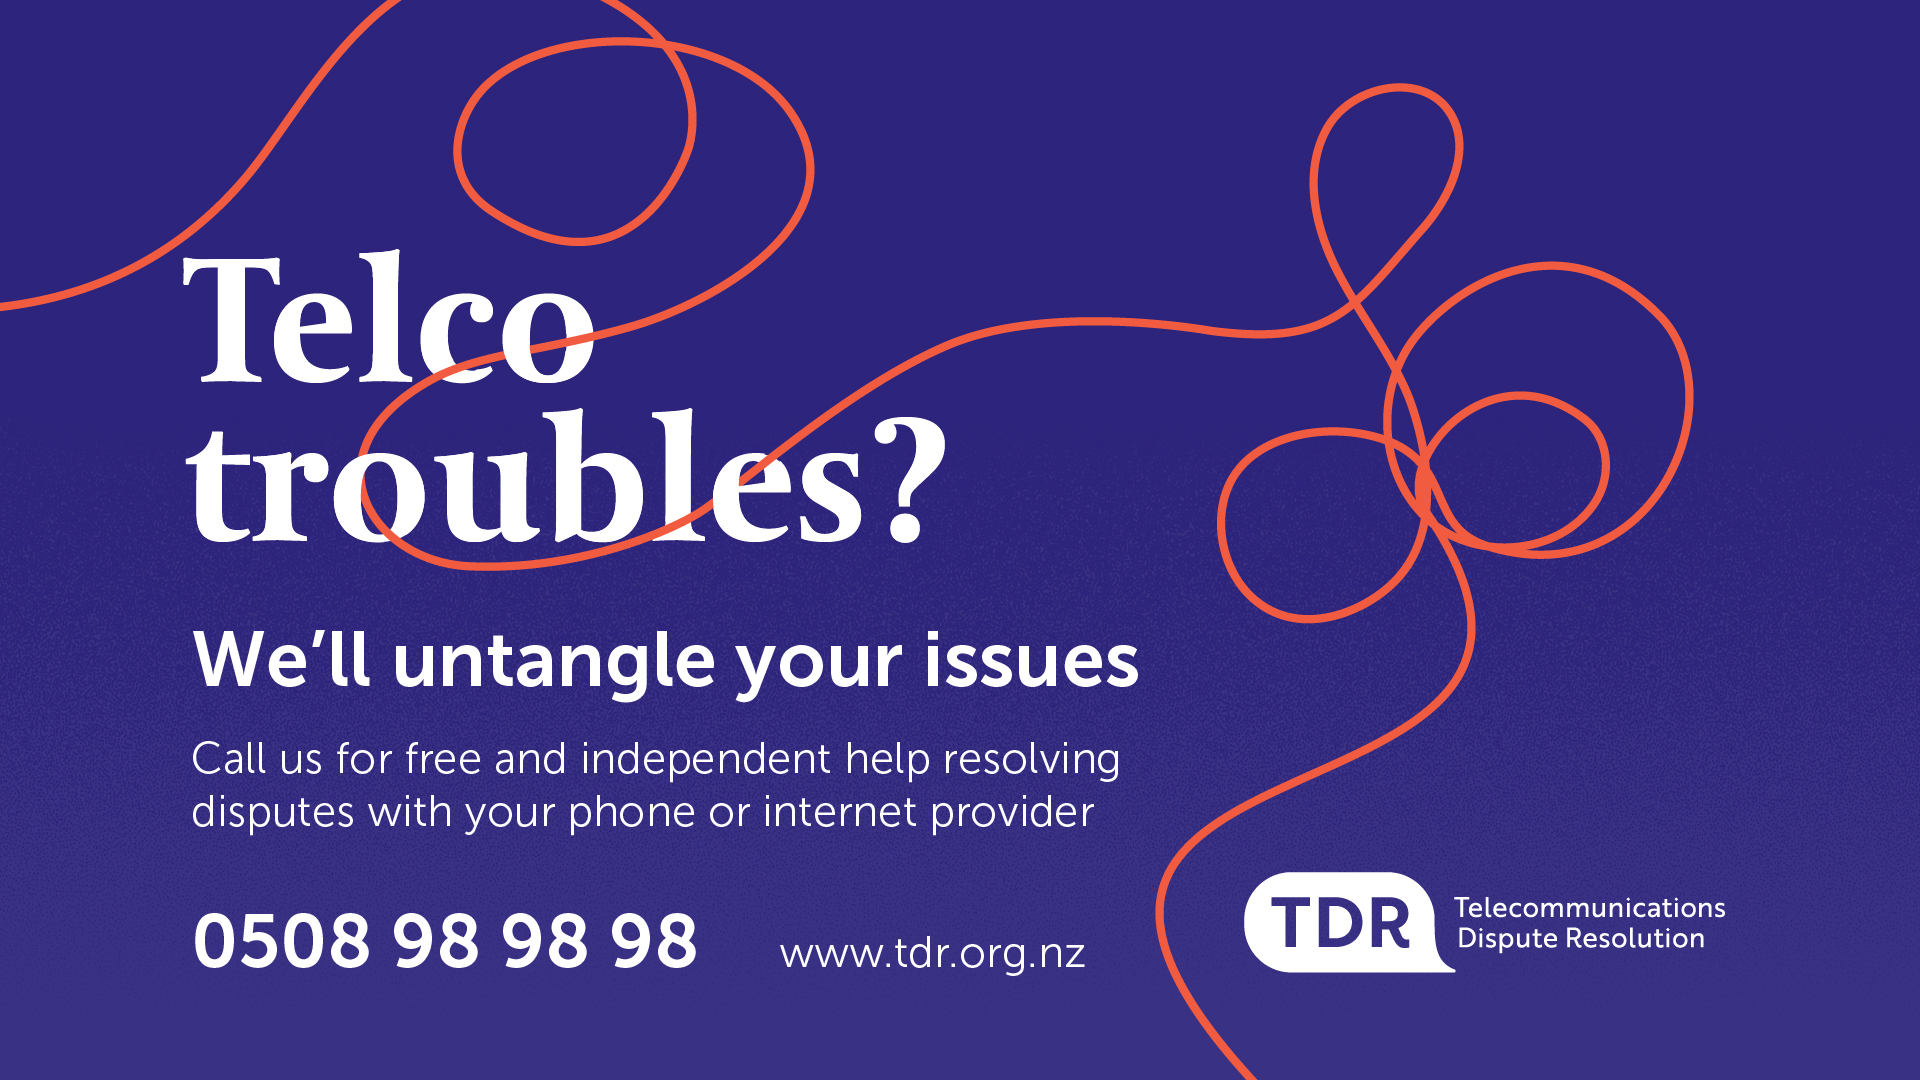 TDR advert still - Telco troubles